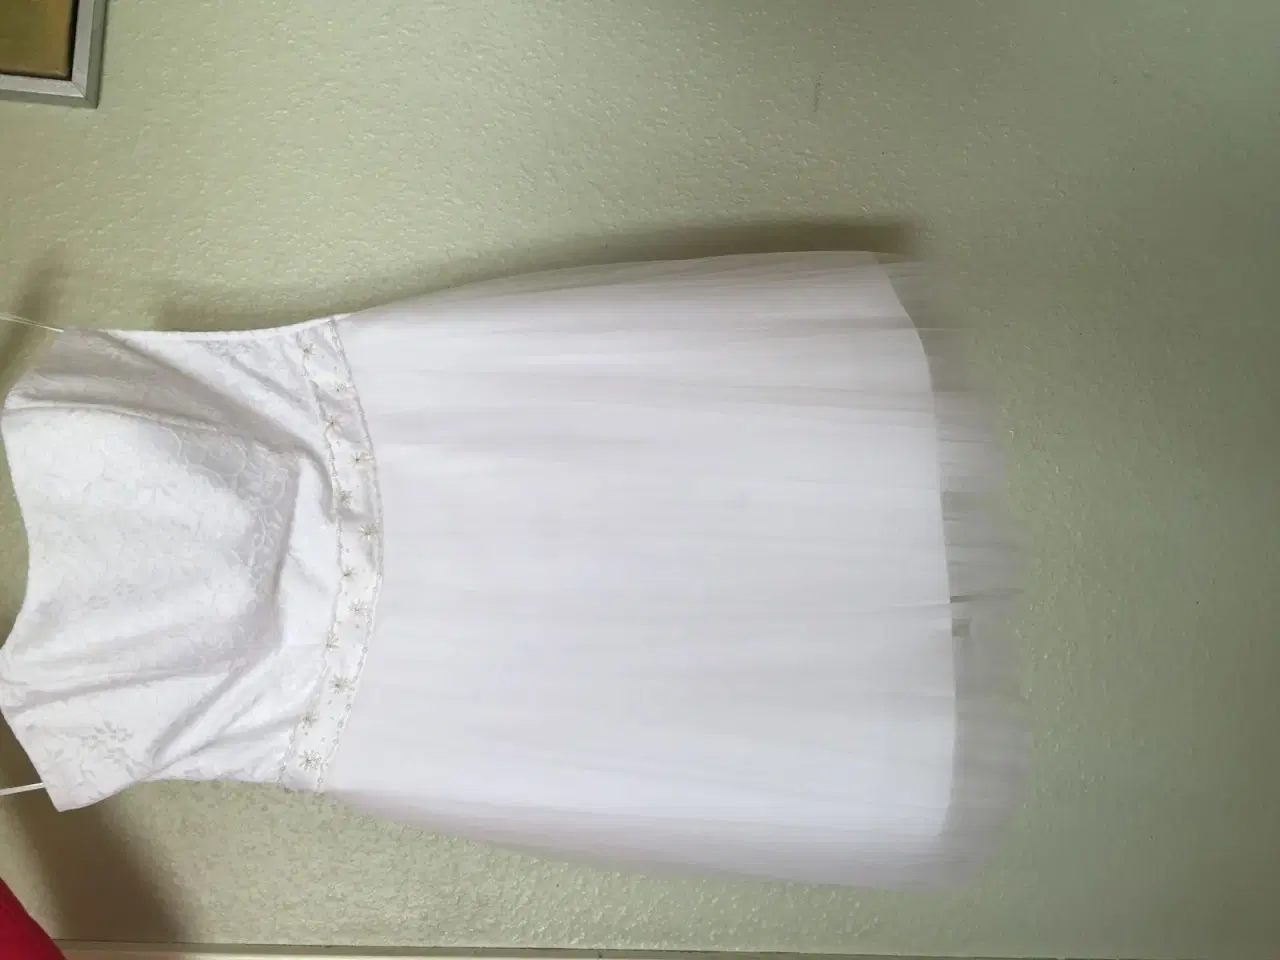 Billede 1 - Konfirmations kjole